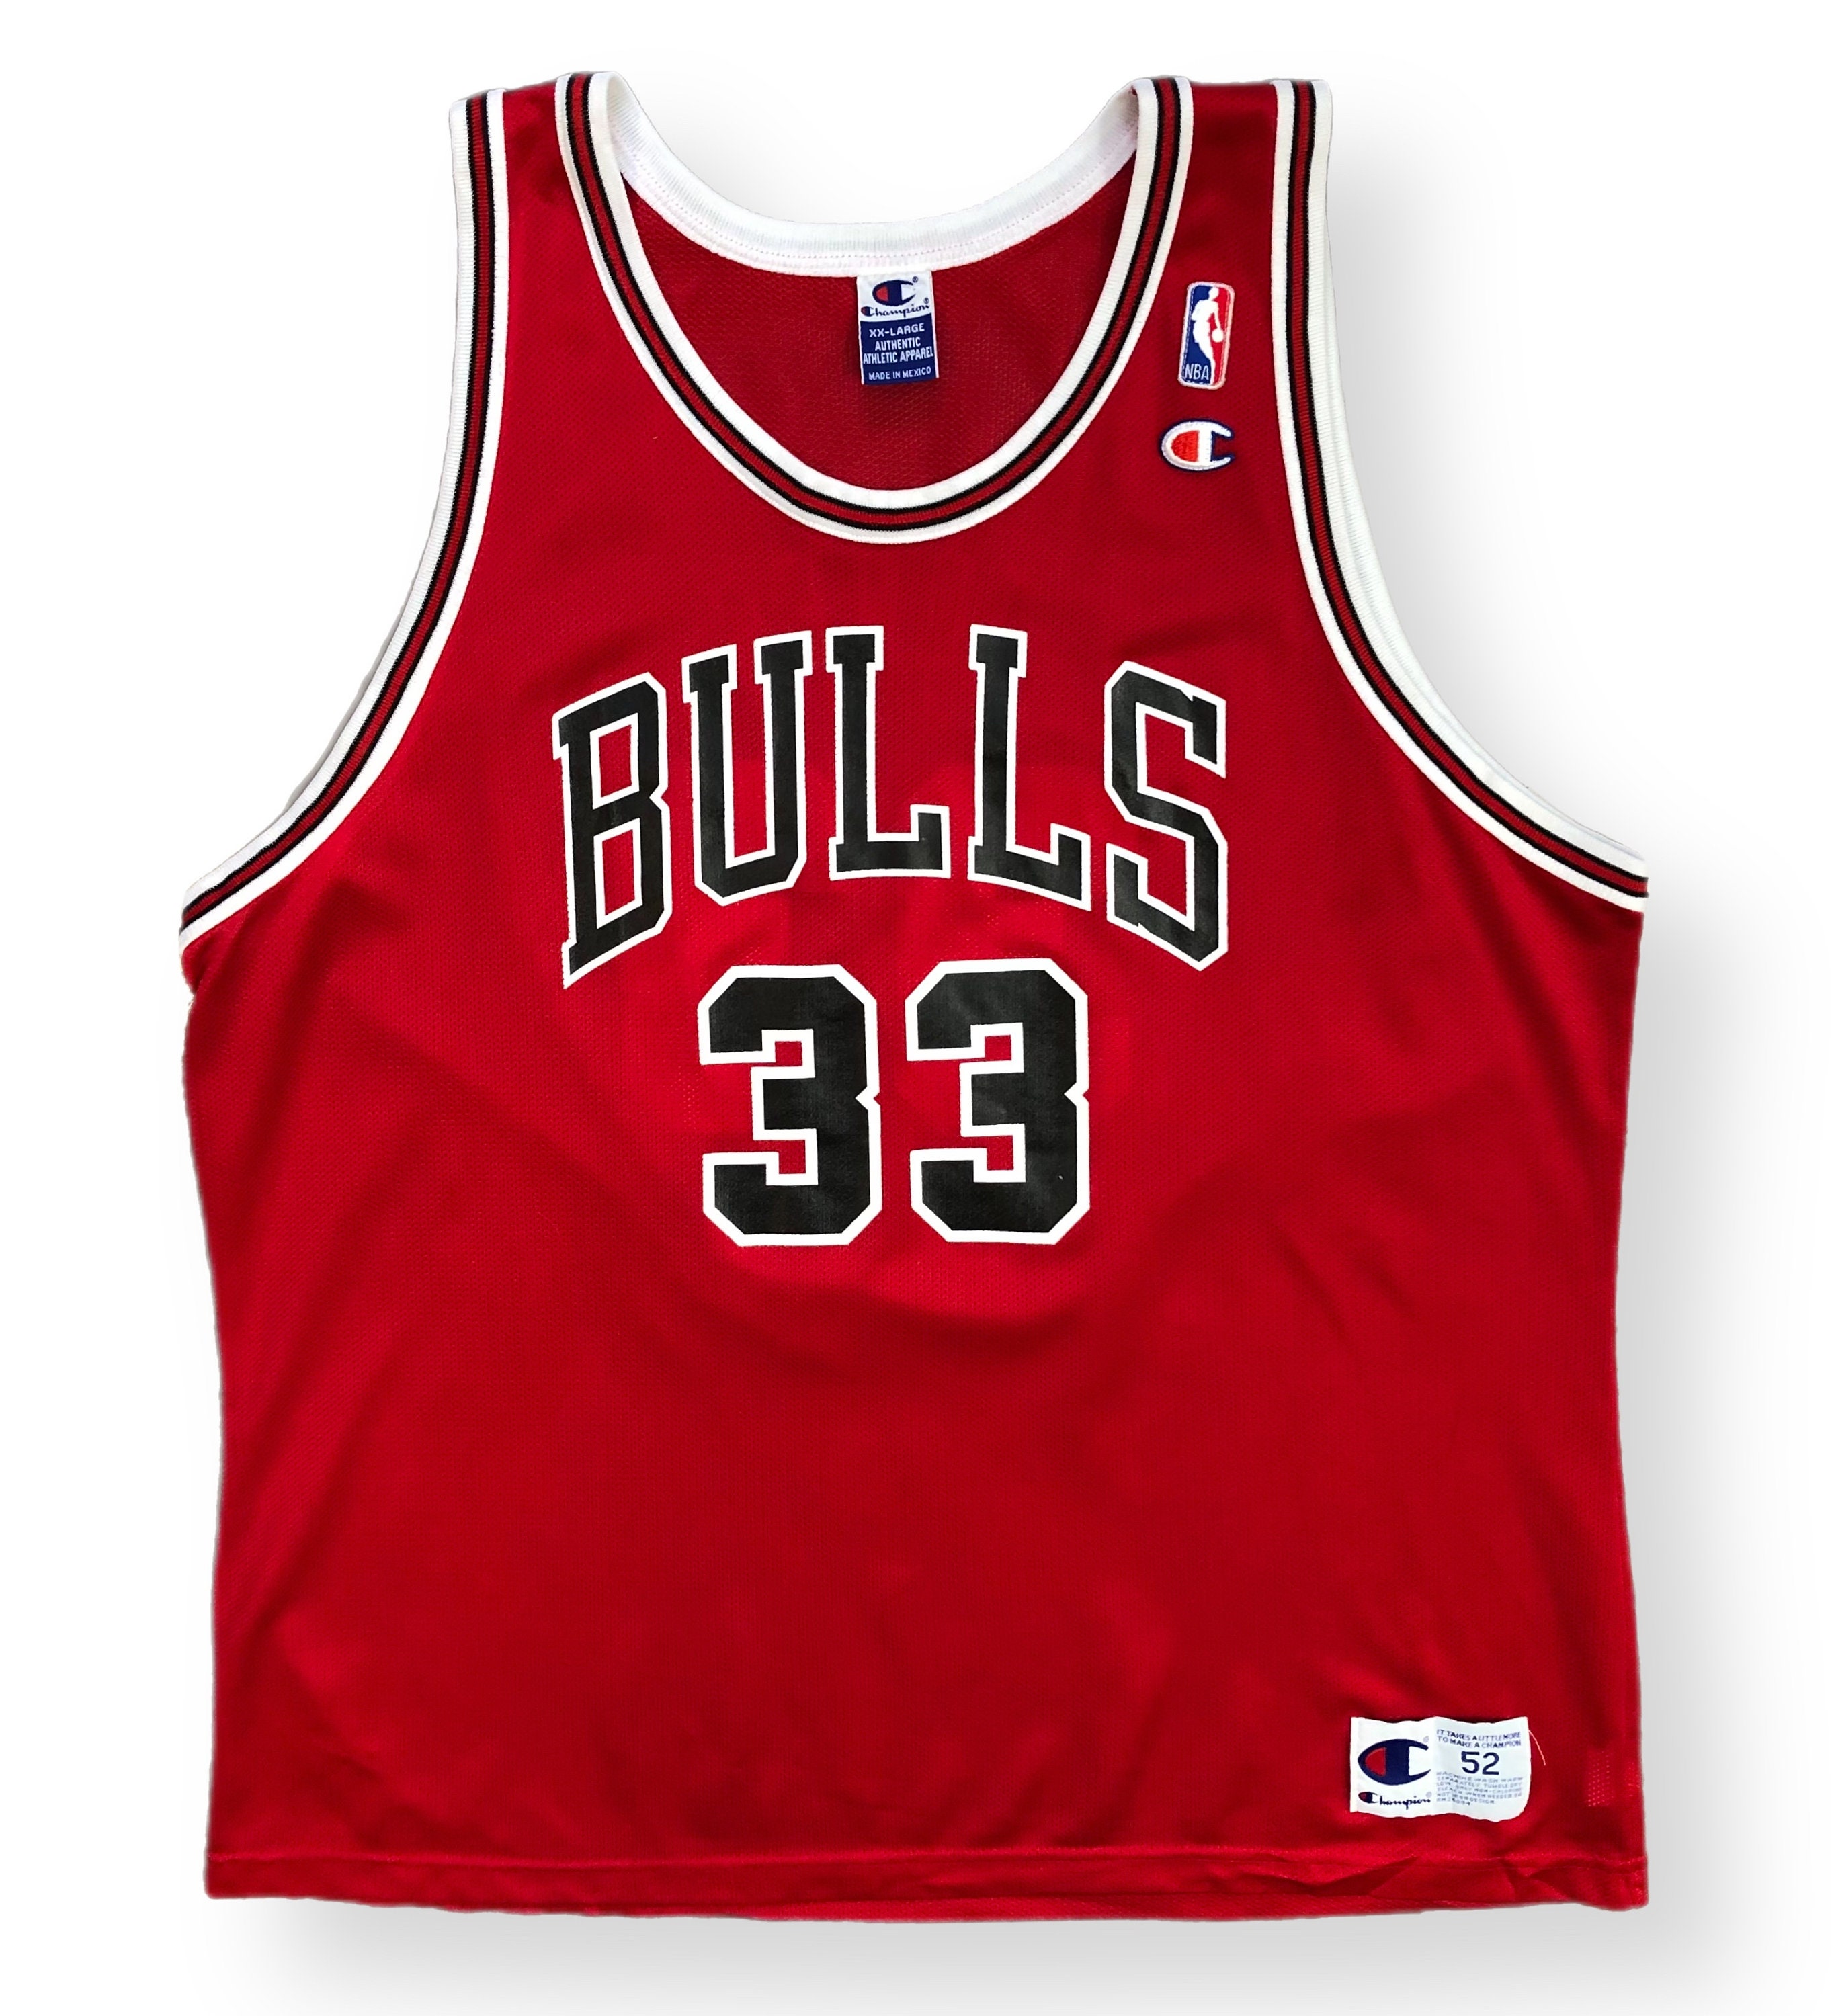 90's Michael Jordan Chicago Bulls Black Alternate Champion NBA